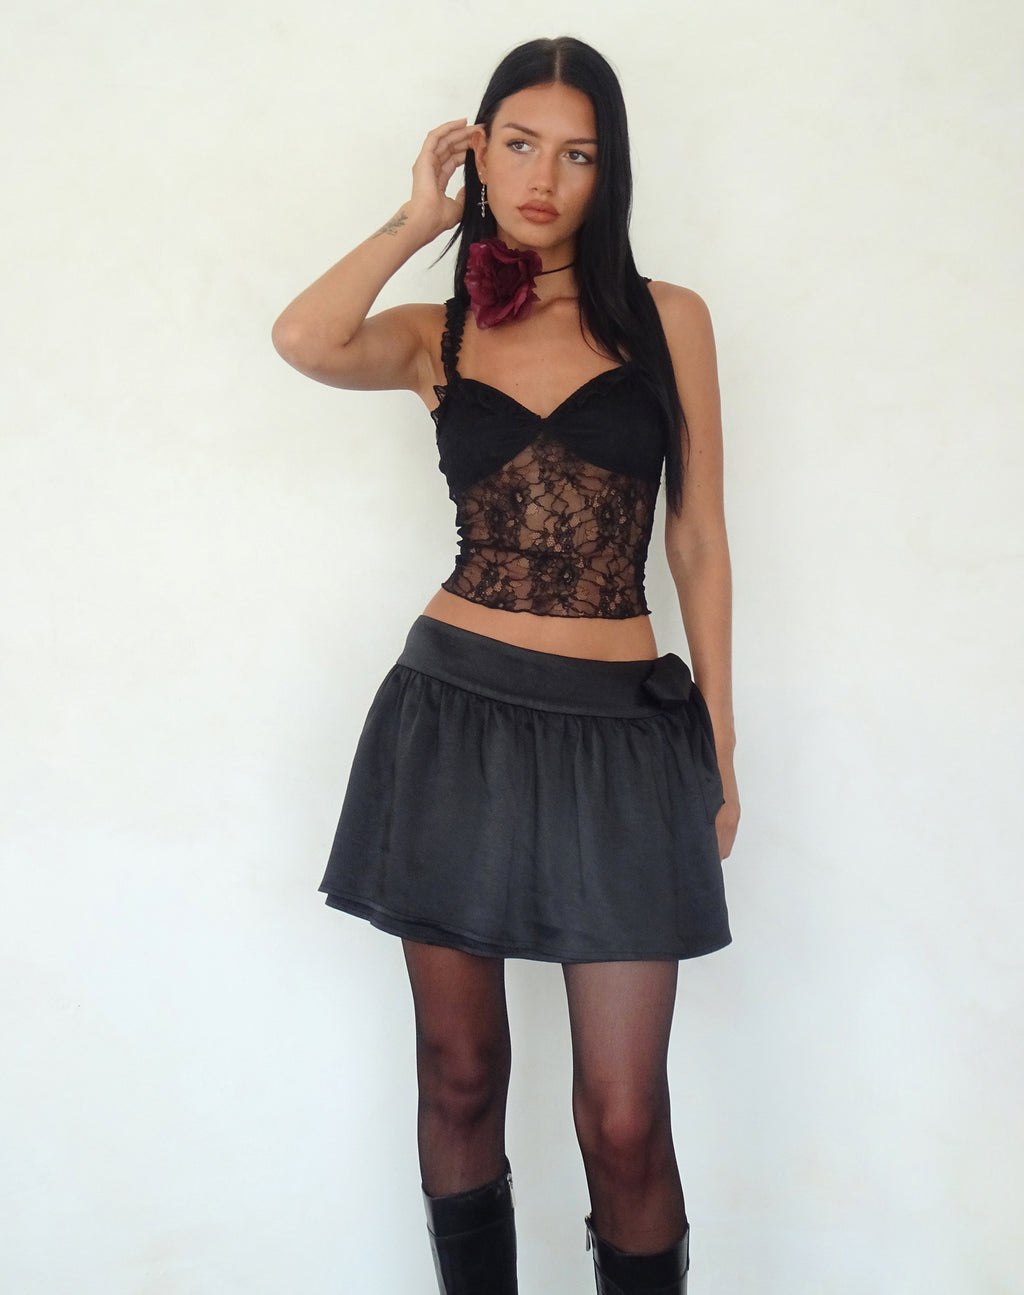 Habema Wrap Mini Skirt in Satin Black